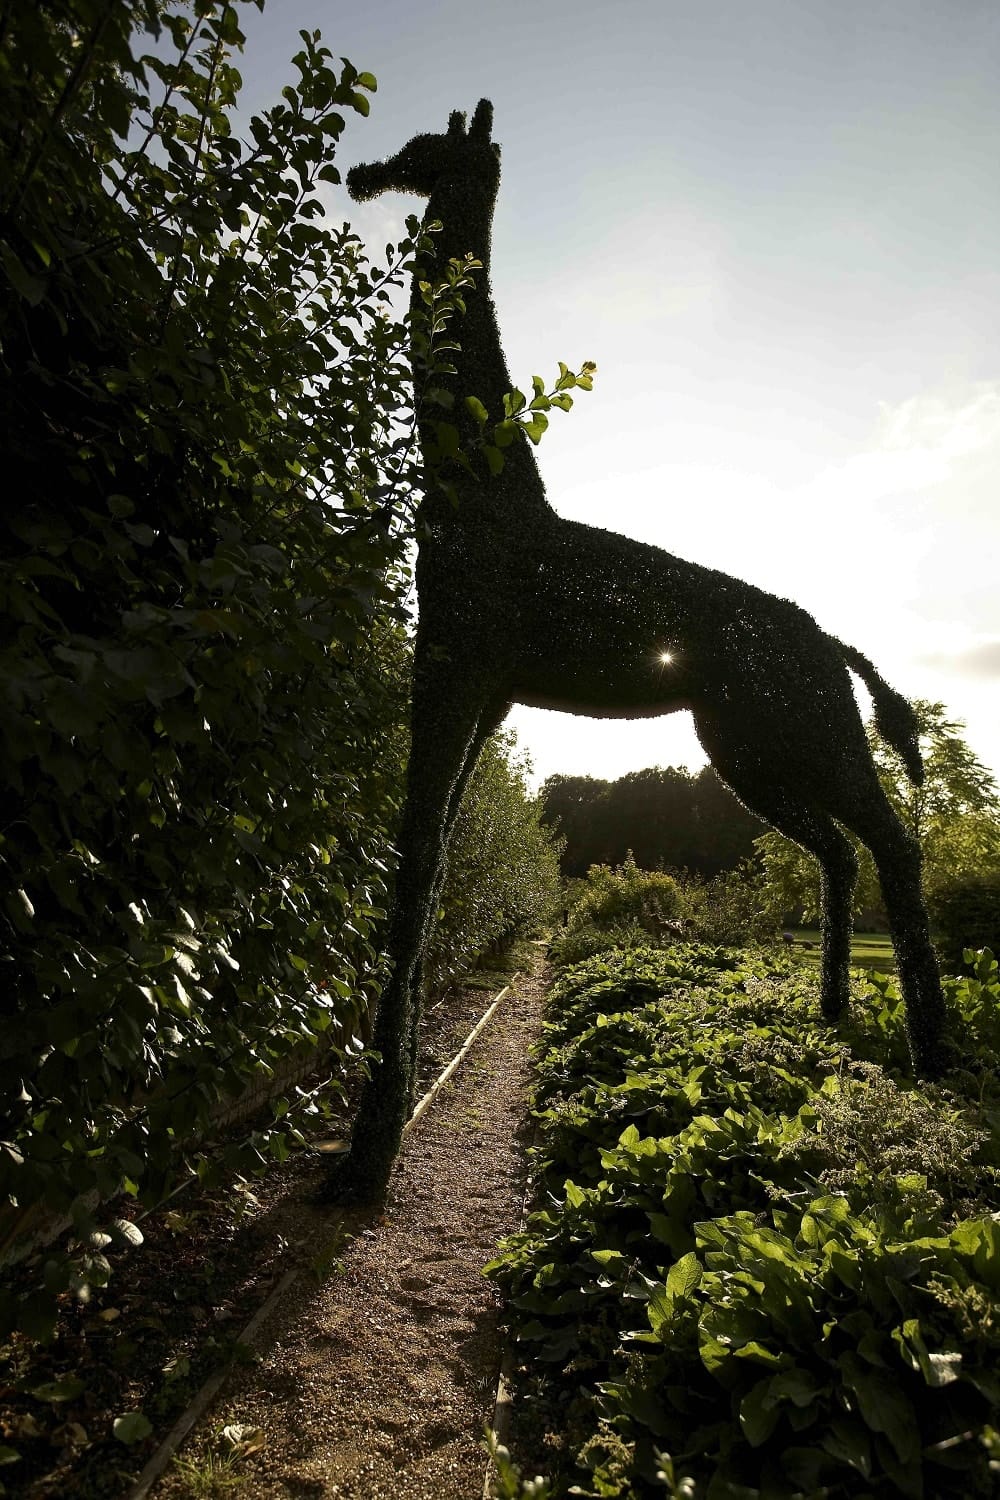 Giraffe feature at The Grove hotel, Hertfordshire